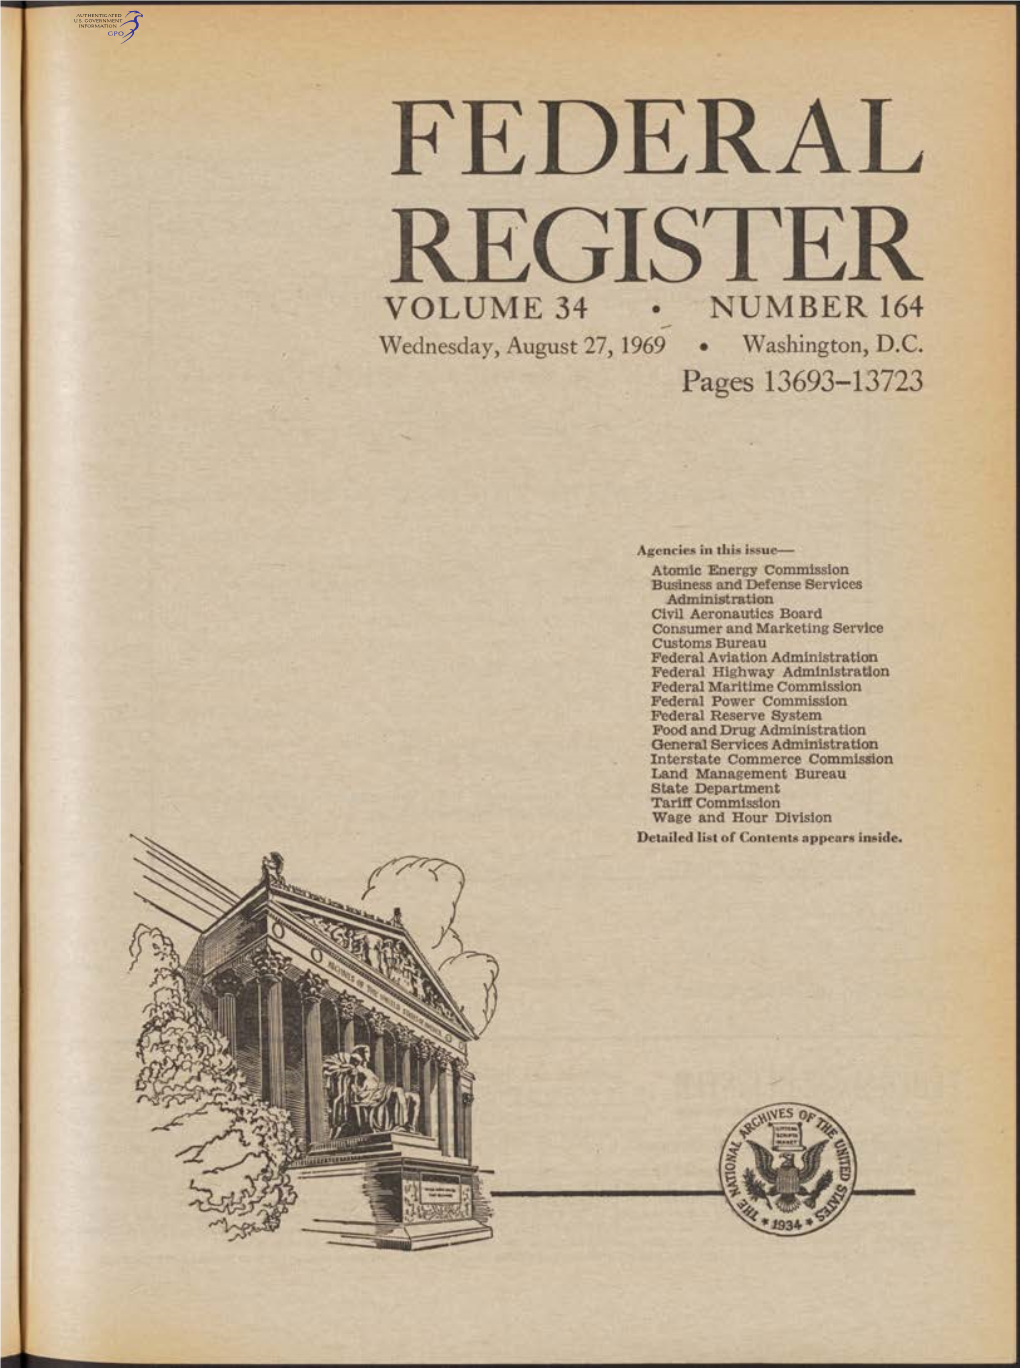 FEDERAL REGISTER VOLUME 34 • NUMBER 164 Wednesday, August 27, 1969 • Washington, D.C